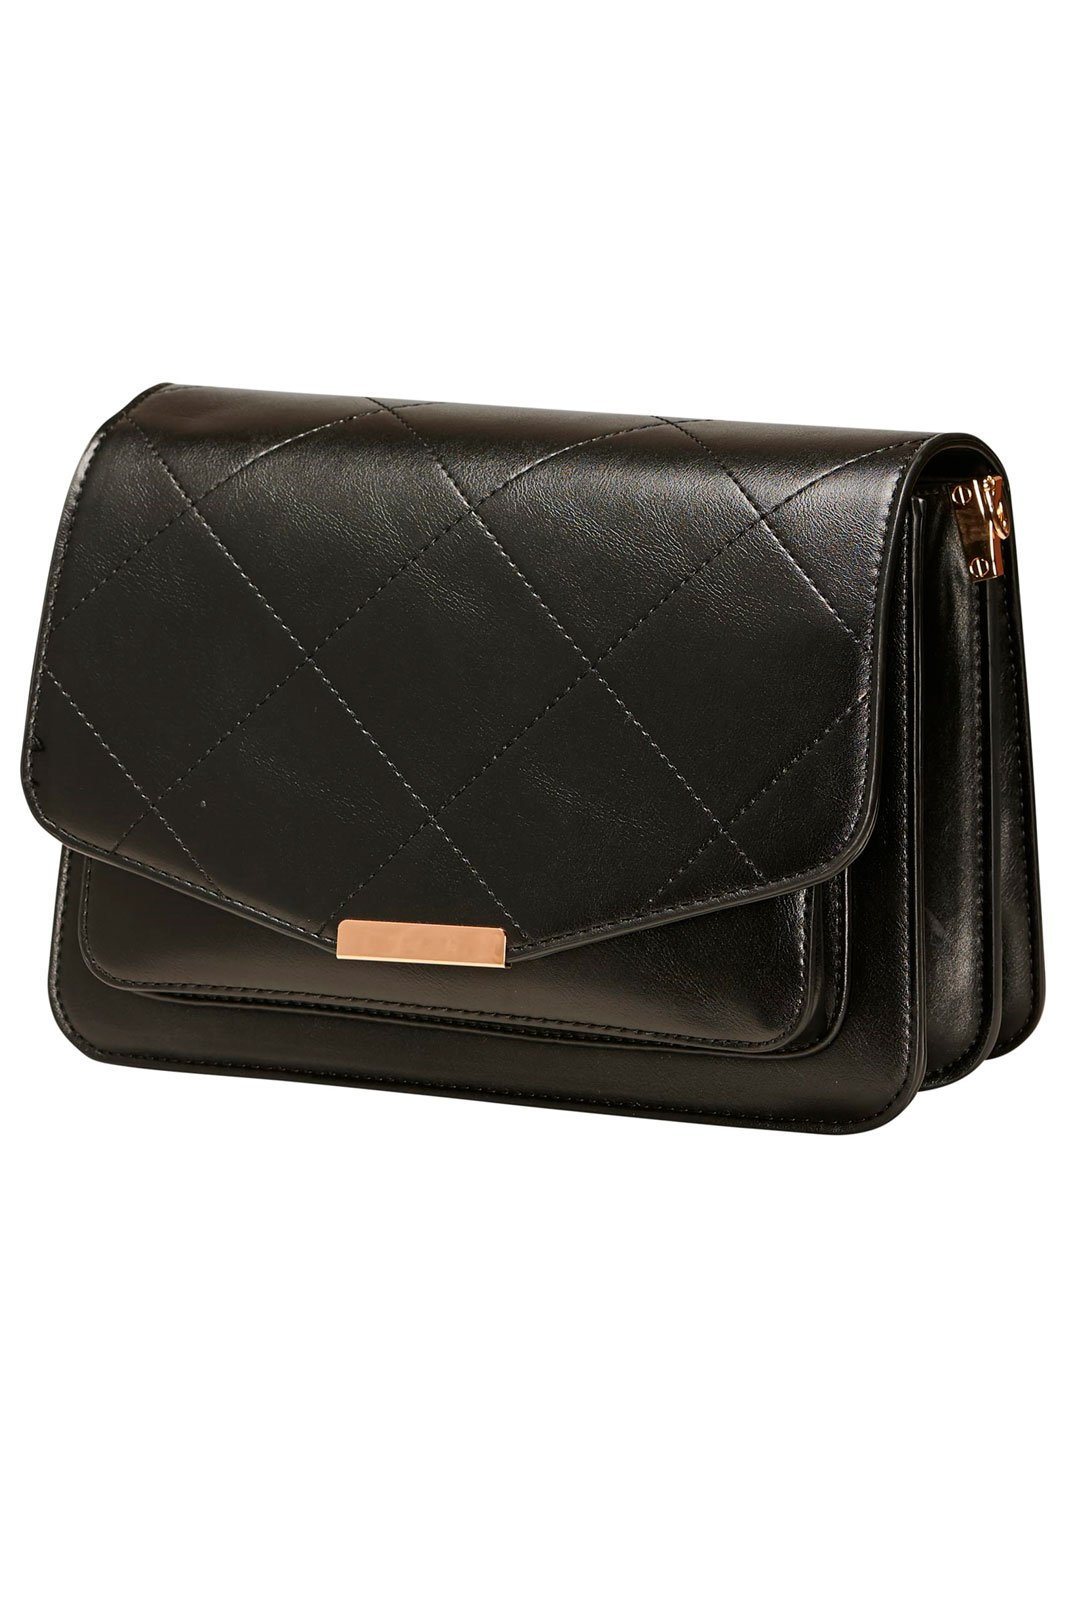 Noella - Blanca Multi Compartment Bag - Black Leather Look Tasker 